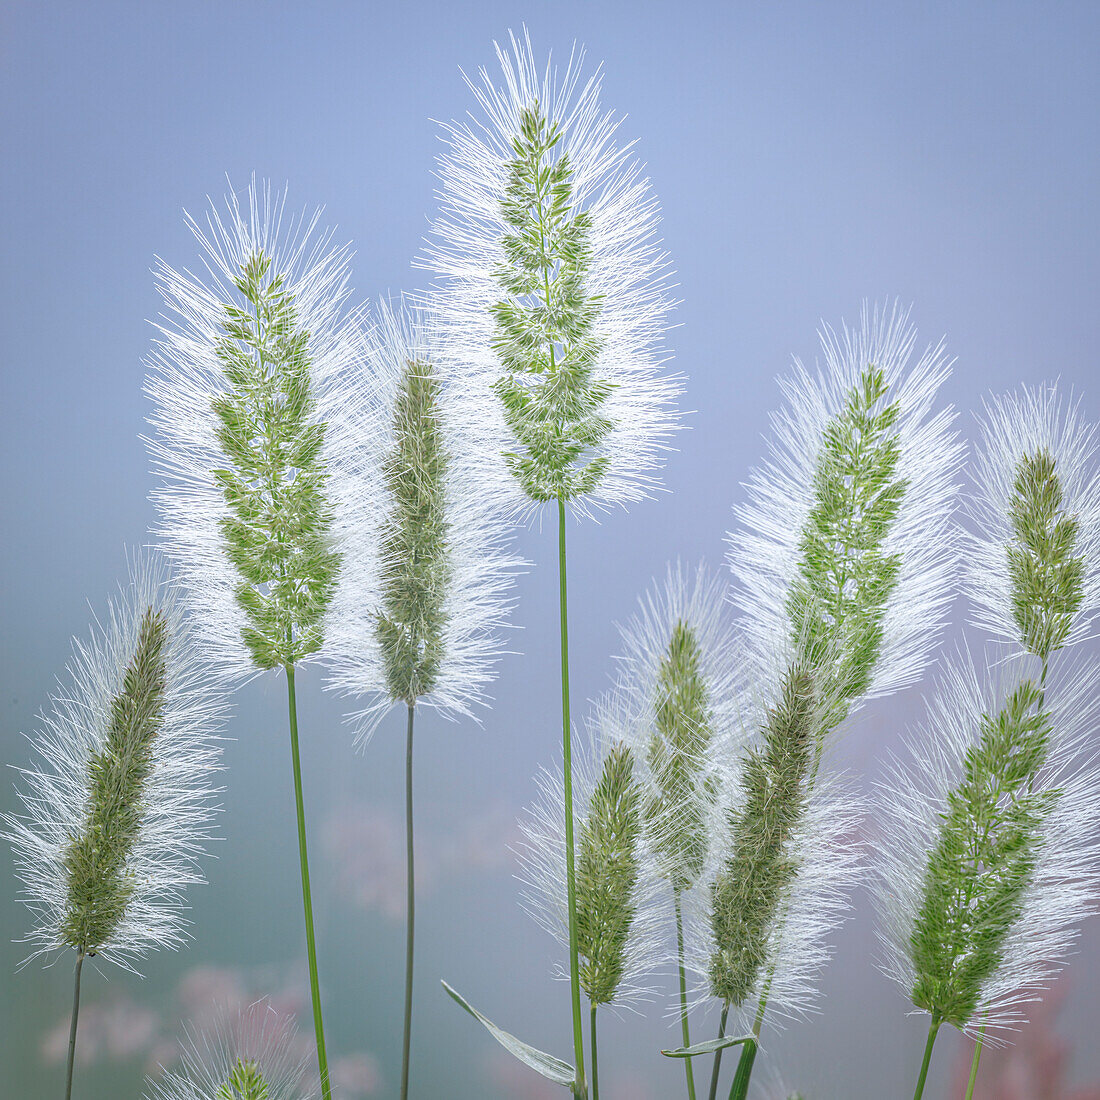 USA, Washington State, Seabeck. Grass seed-heads close-up.